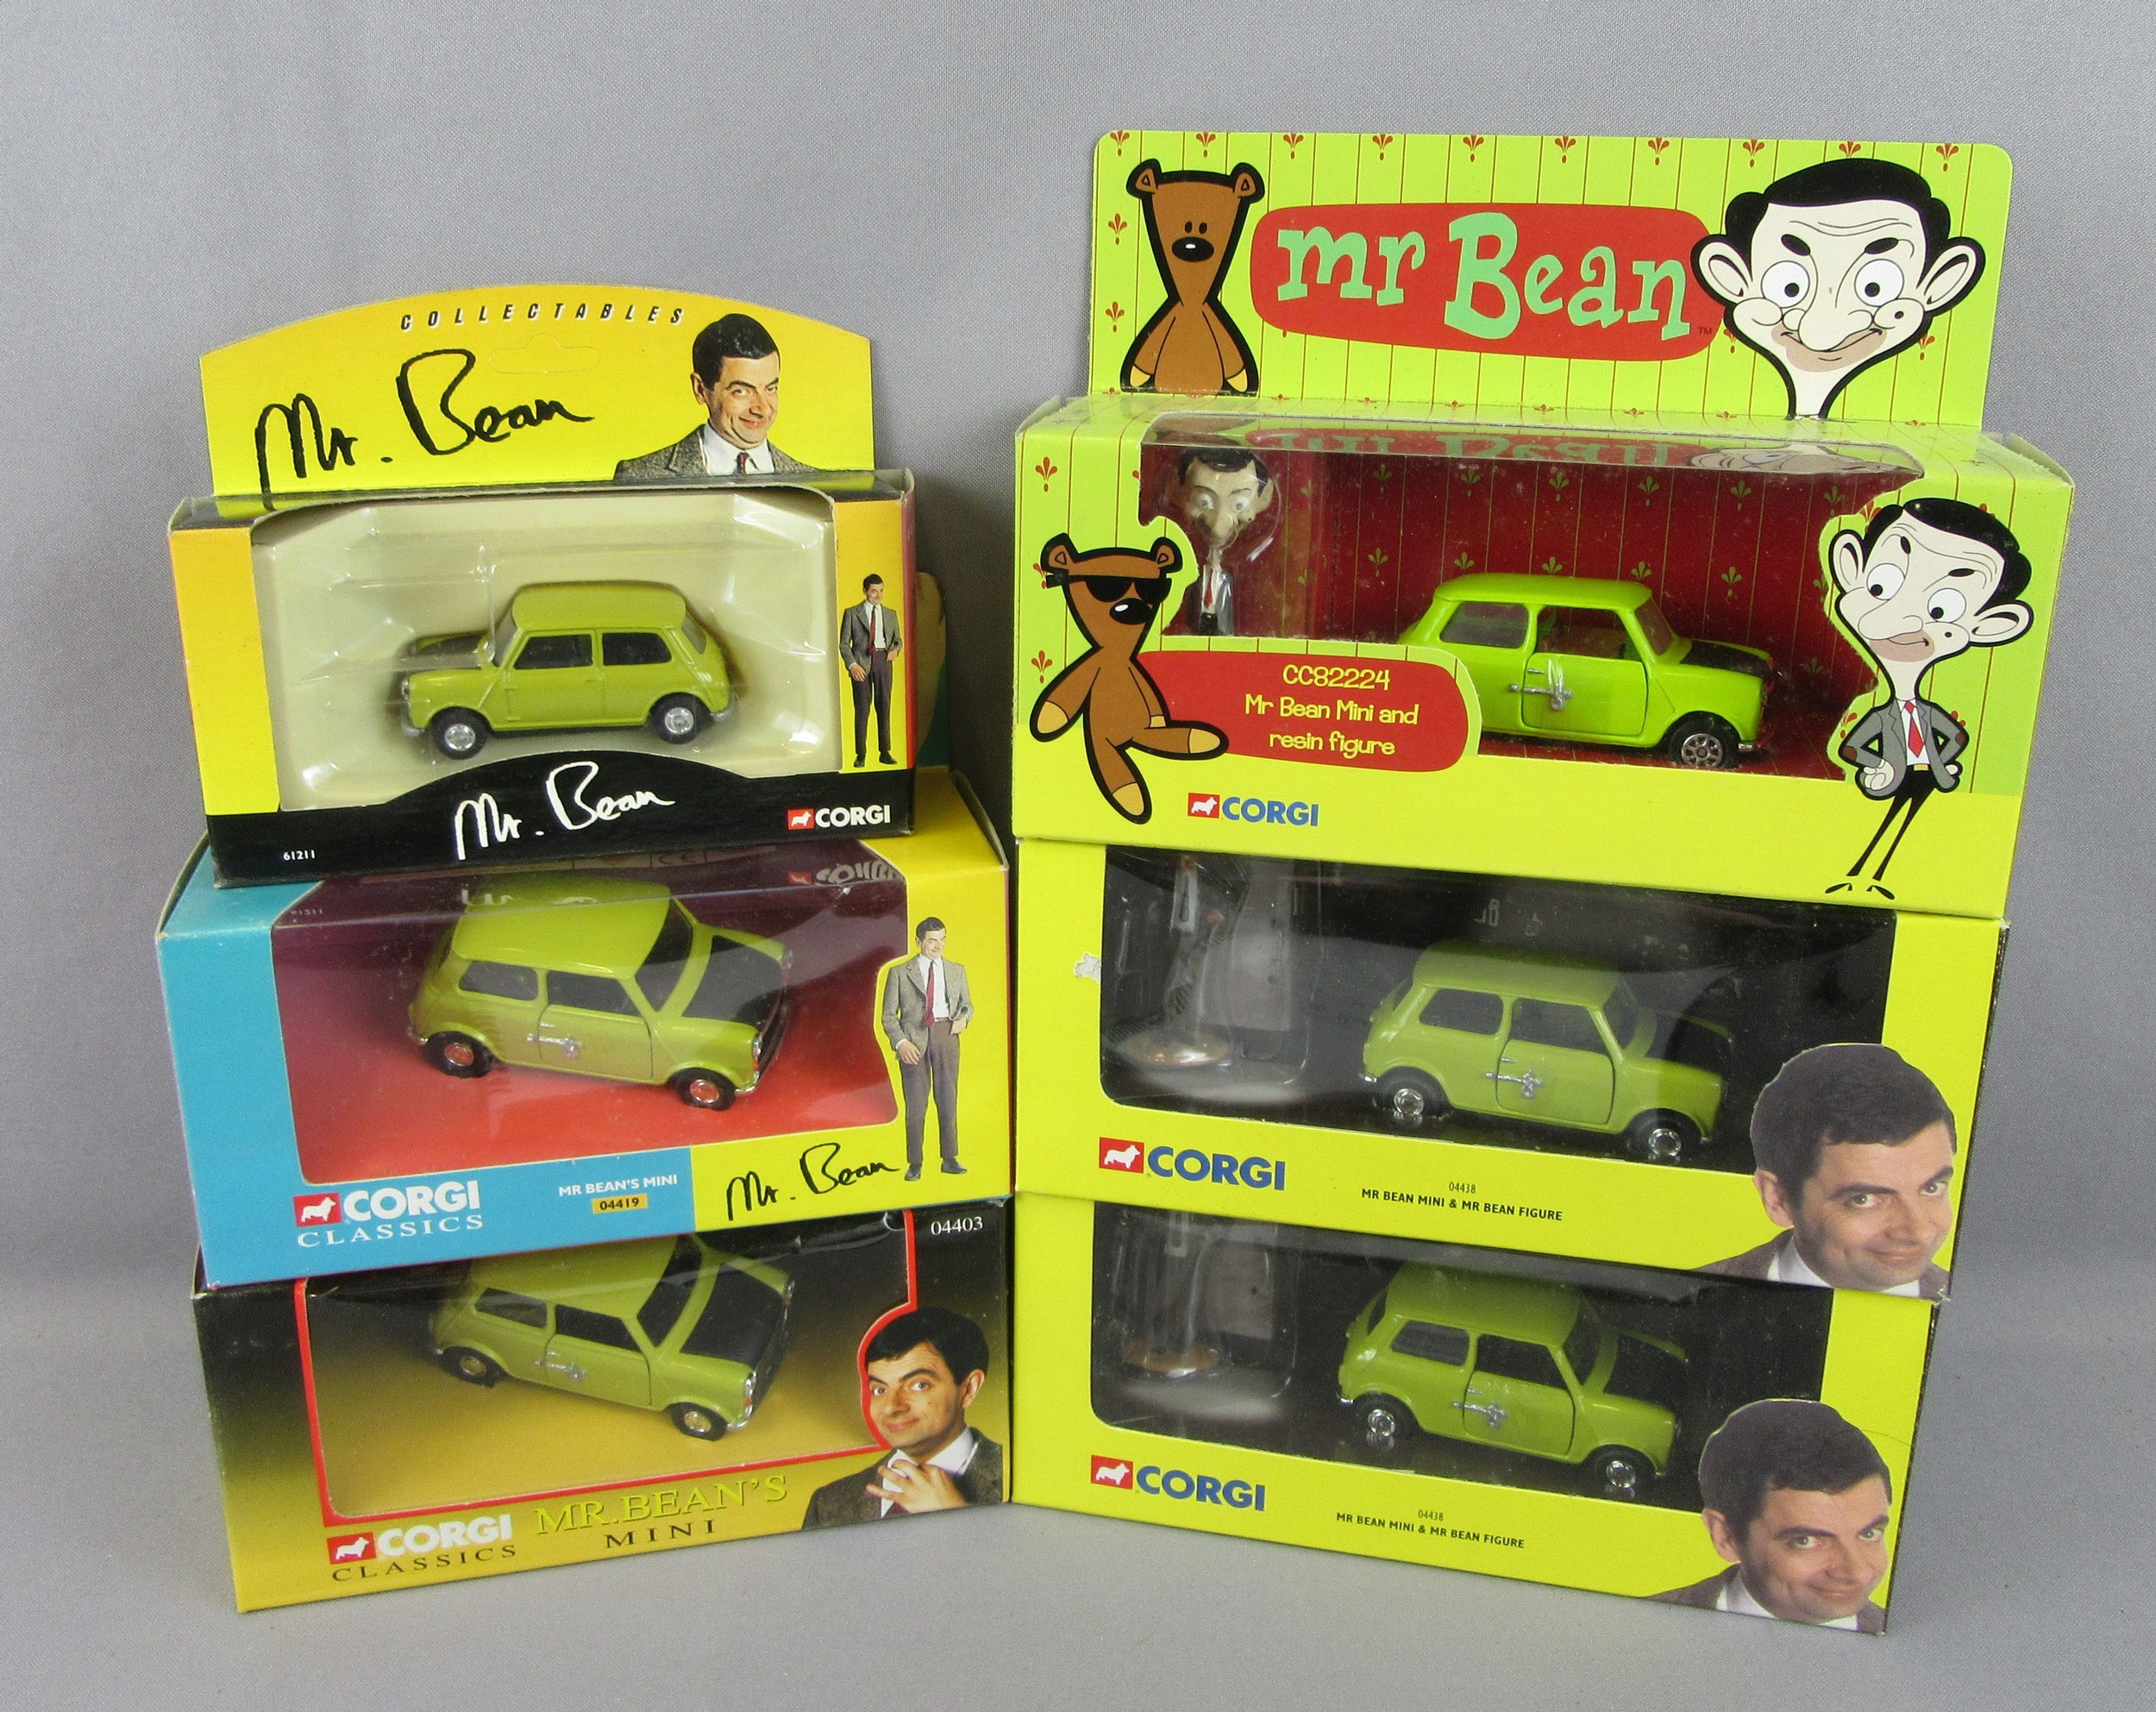 CORGI 'Mr Bean' Minis to include 2x 04438, CC82224, 04403, 04419